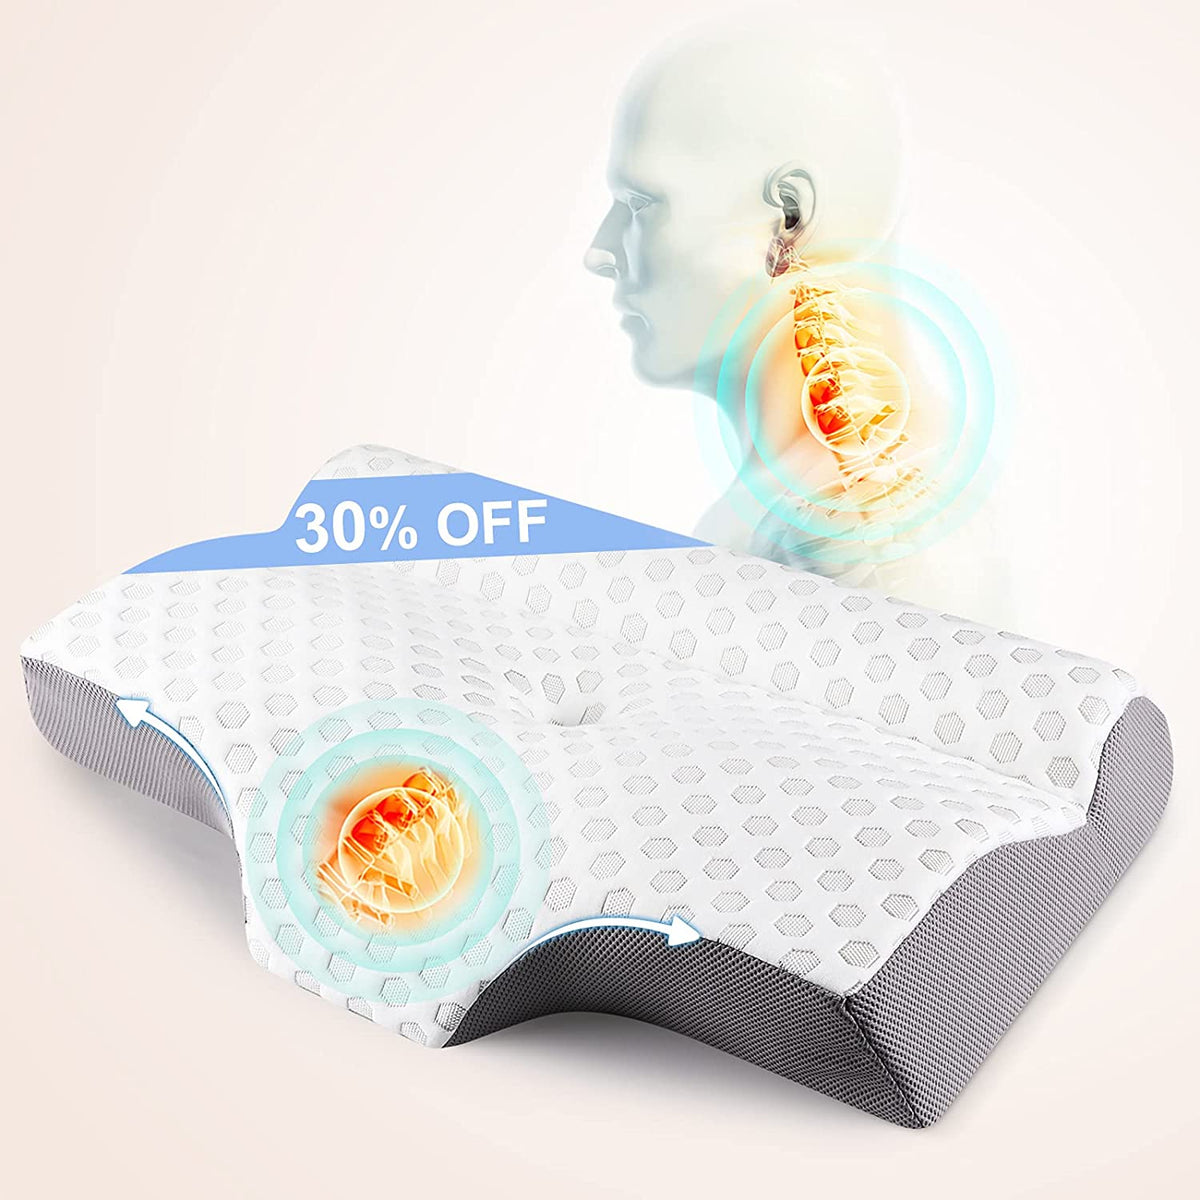 Cervical Contour Memory Foam Pillow: Neck Support Chiropractic